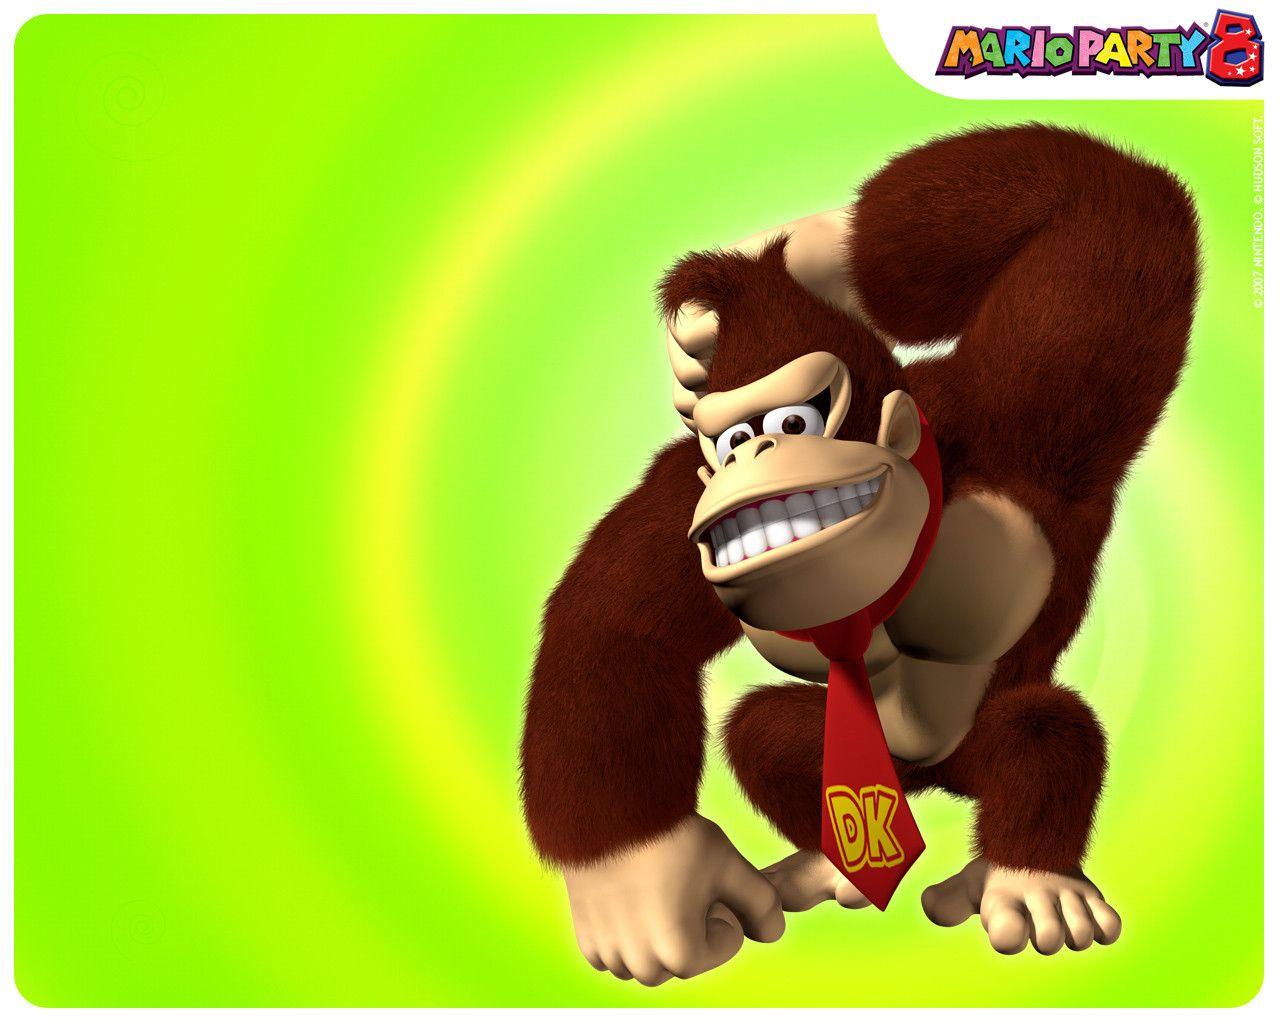 Mario Party 8: DK Kong Wallpaper